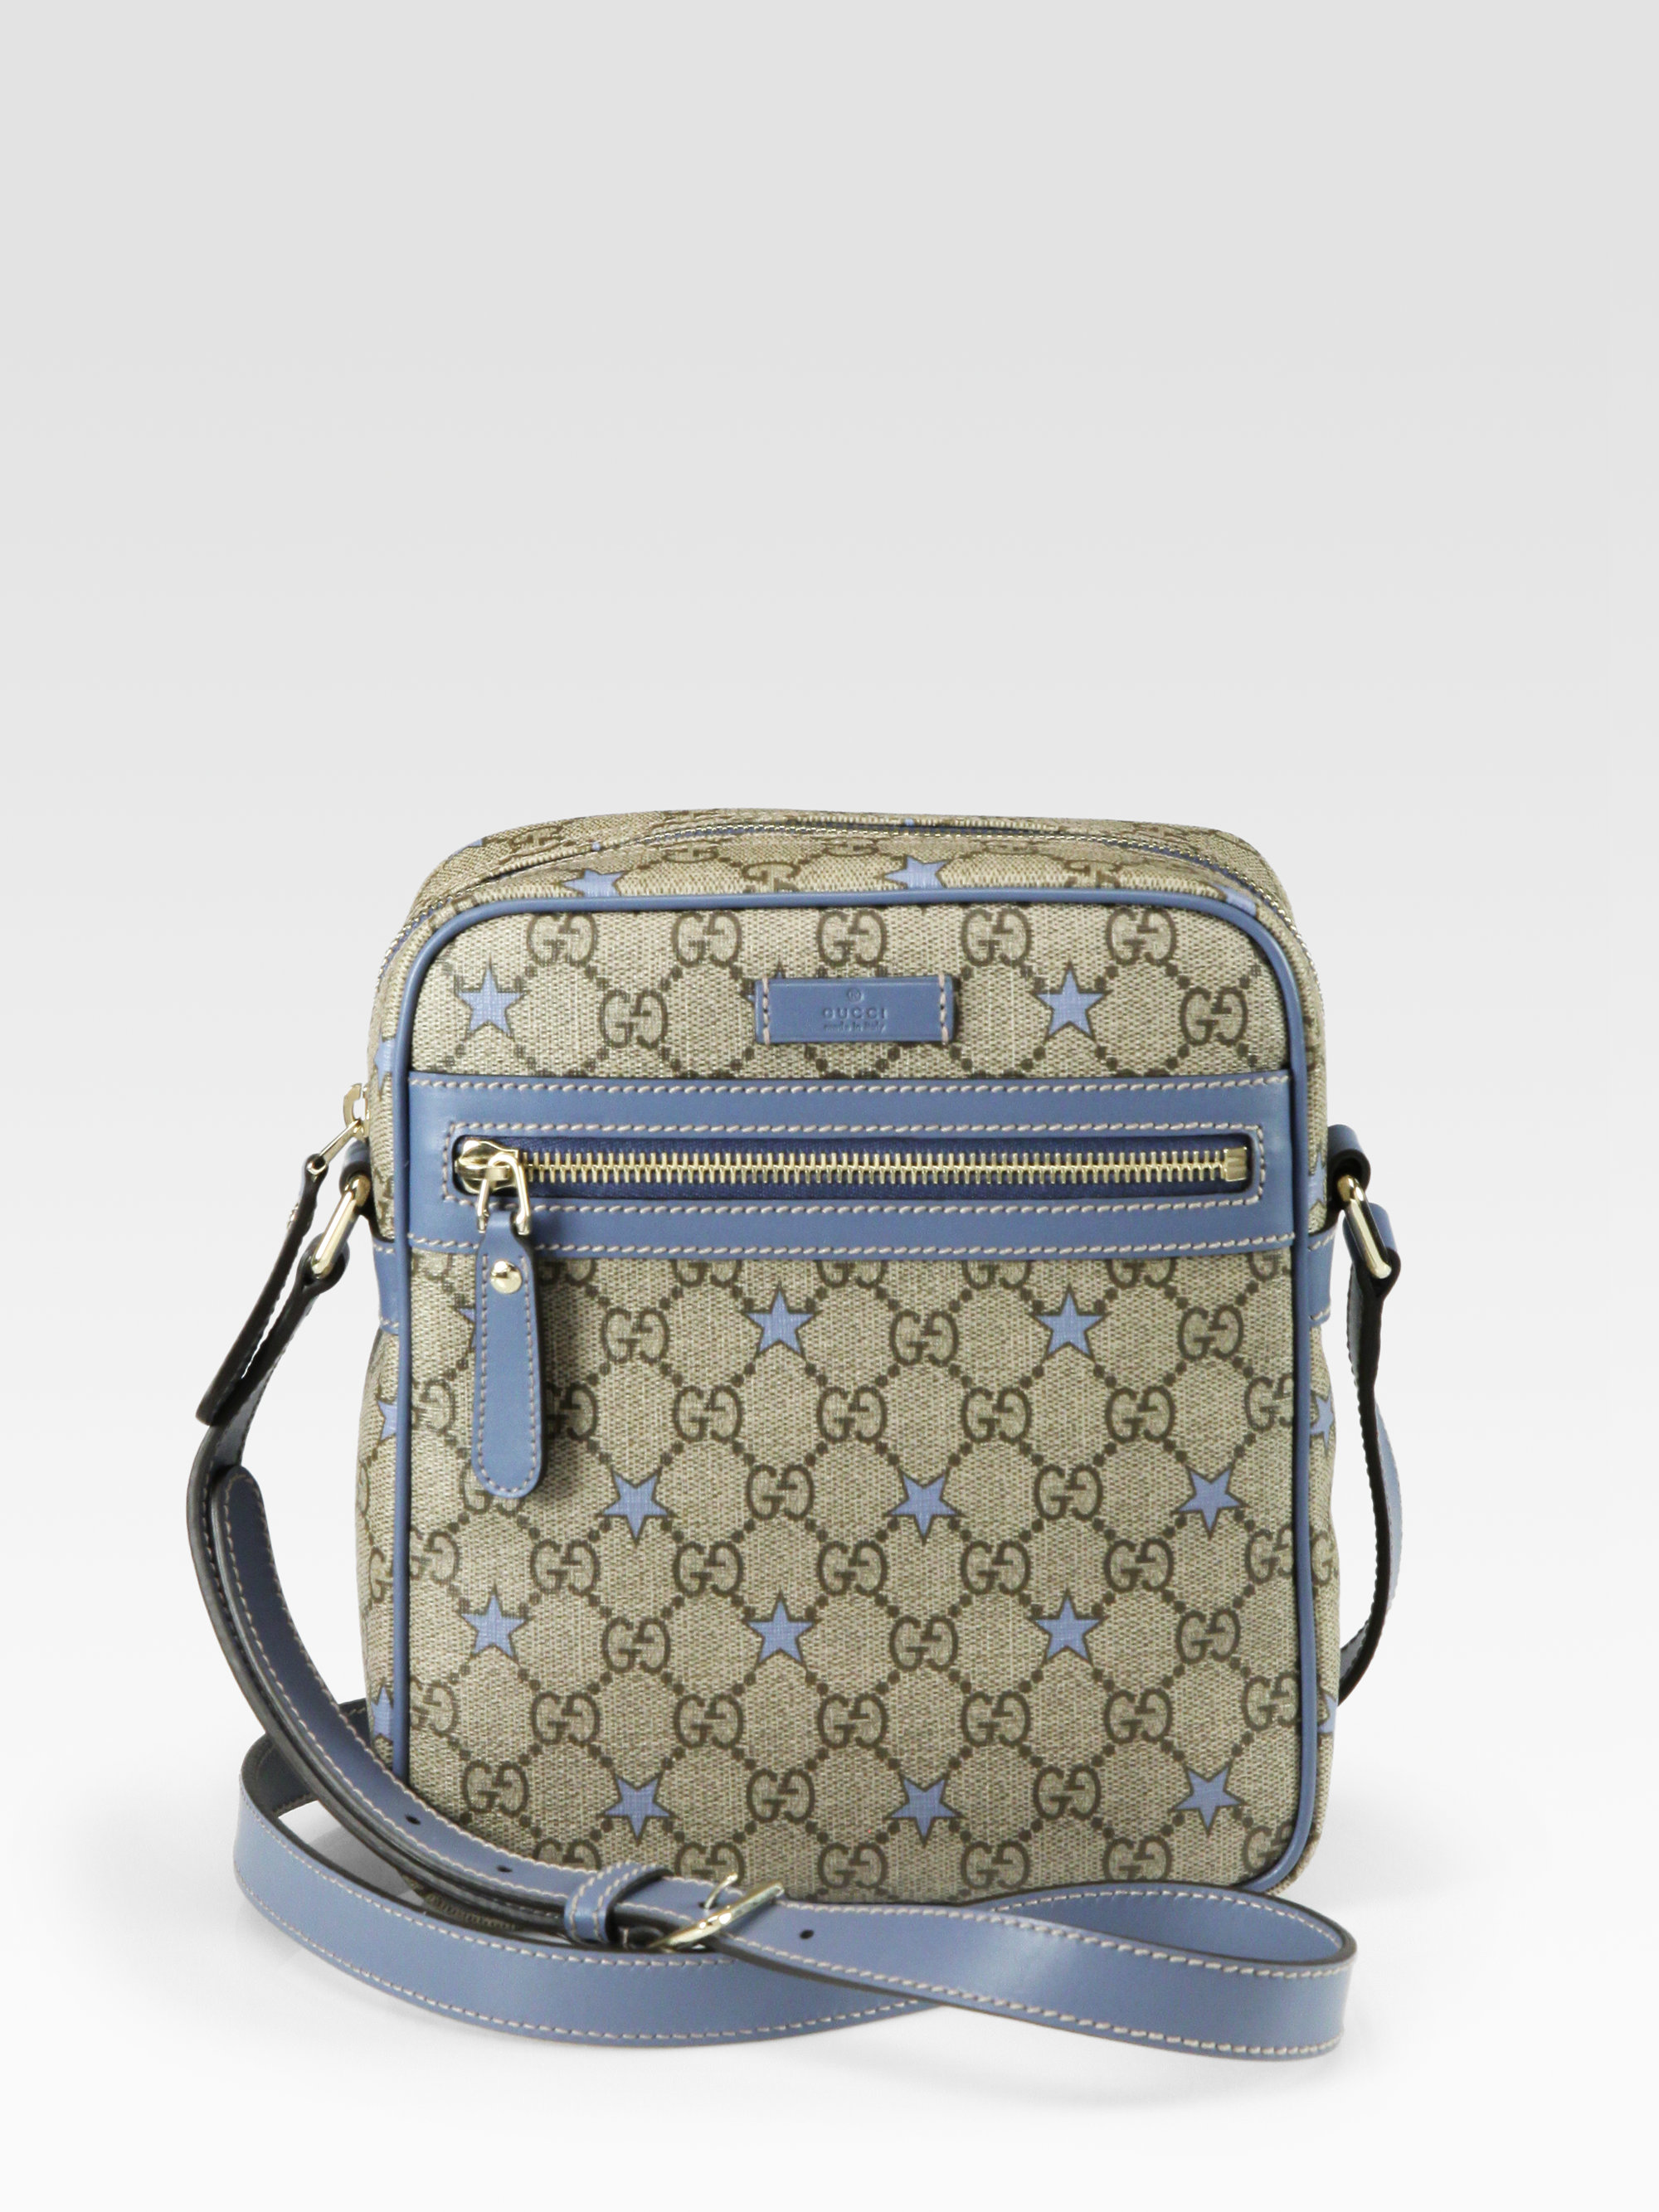 Gucci GG Pu Stars Fabric Shoulder Bag in Sky Blue (Blue) for Men - Lyst